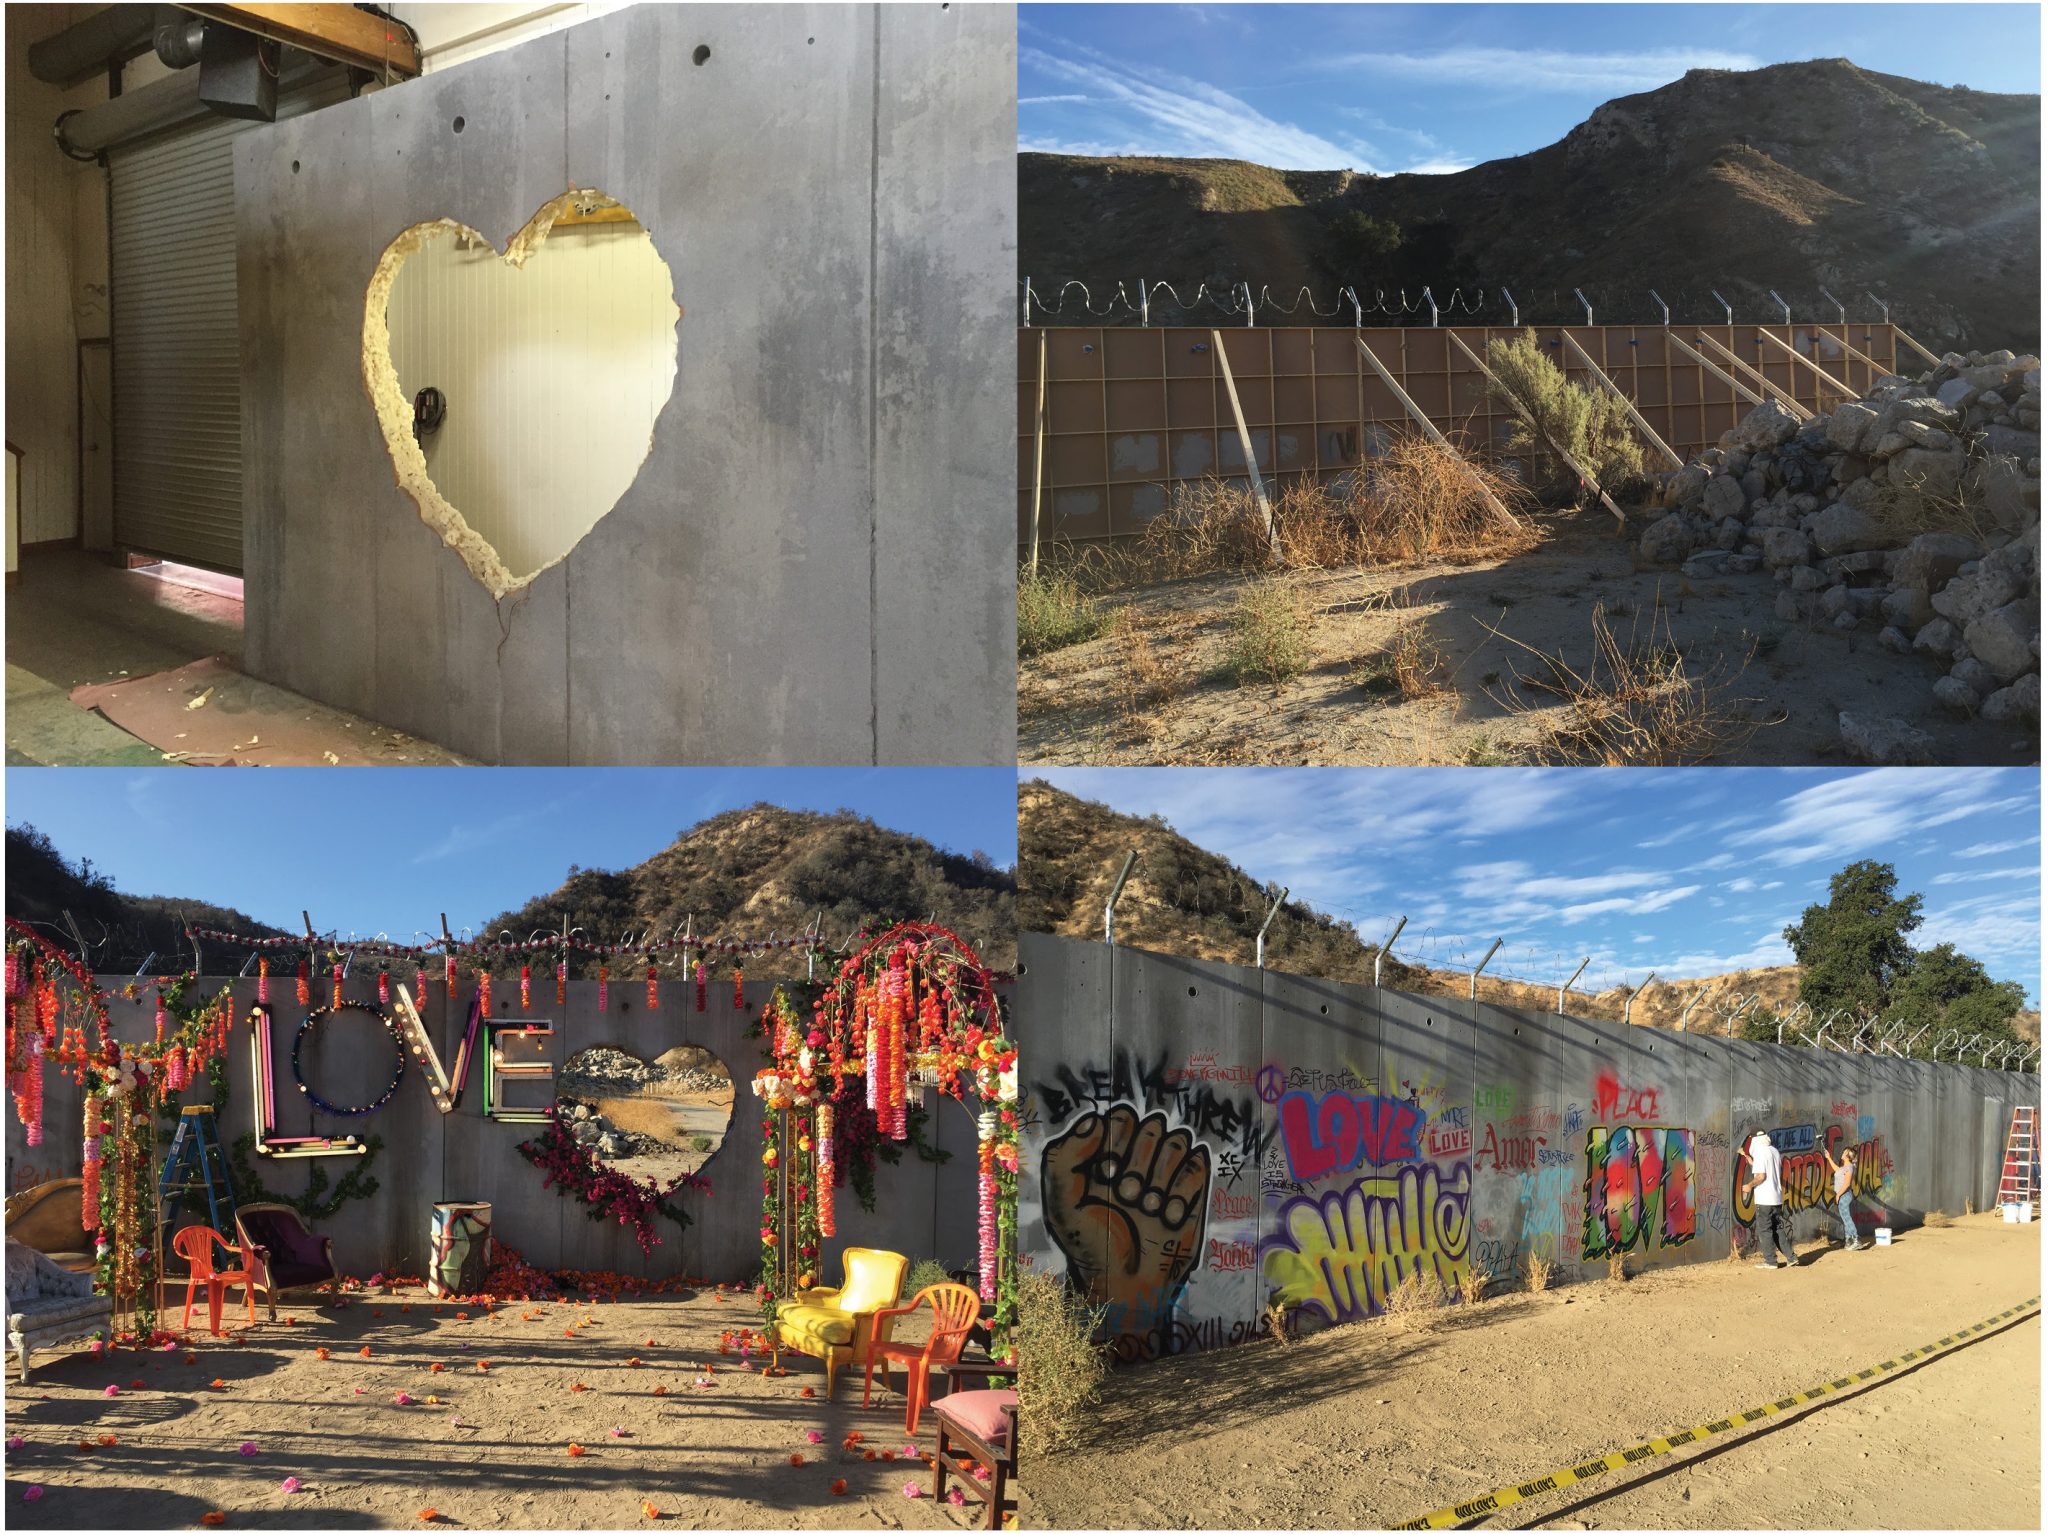 David LaChapelle | Diesel - Make love not walls | Set design and build in the California desert. | 4